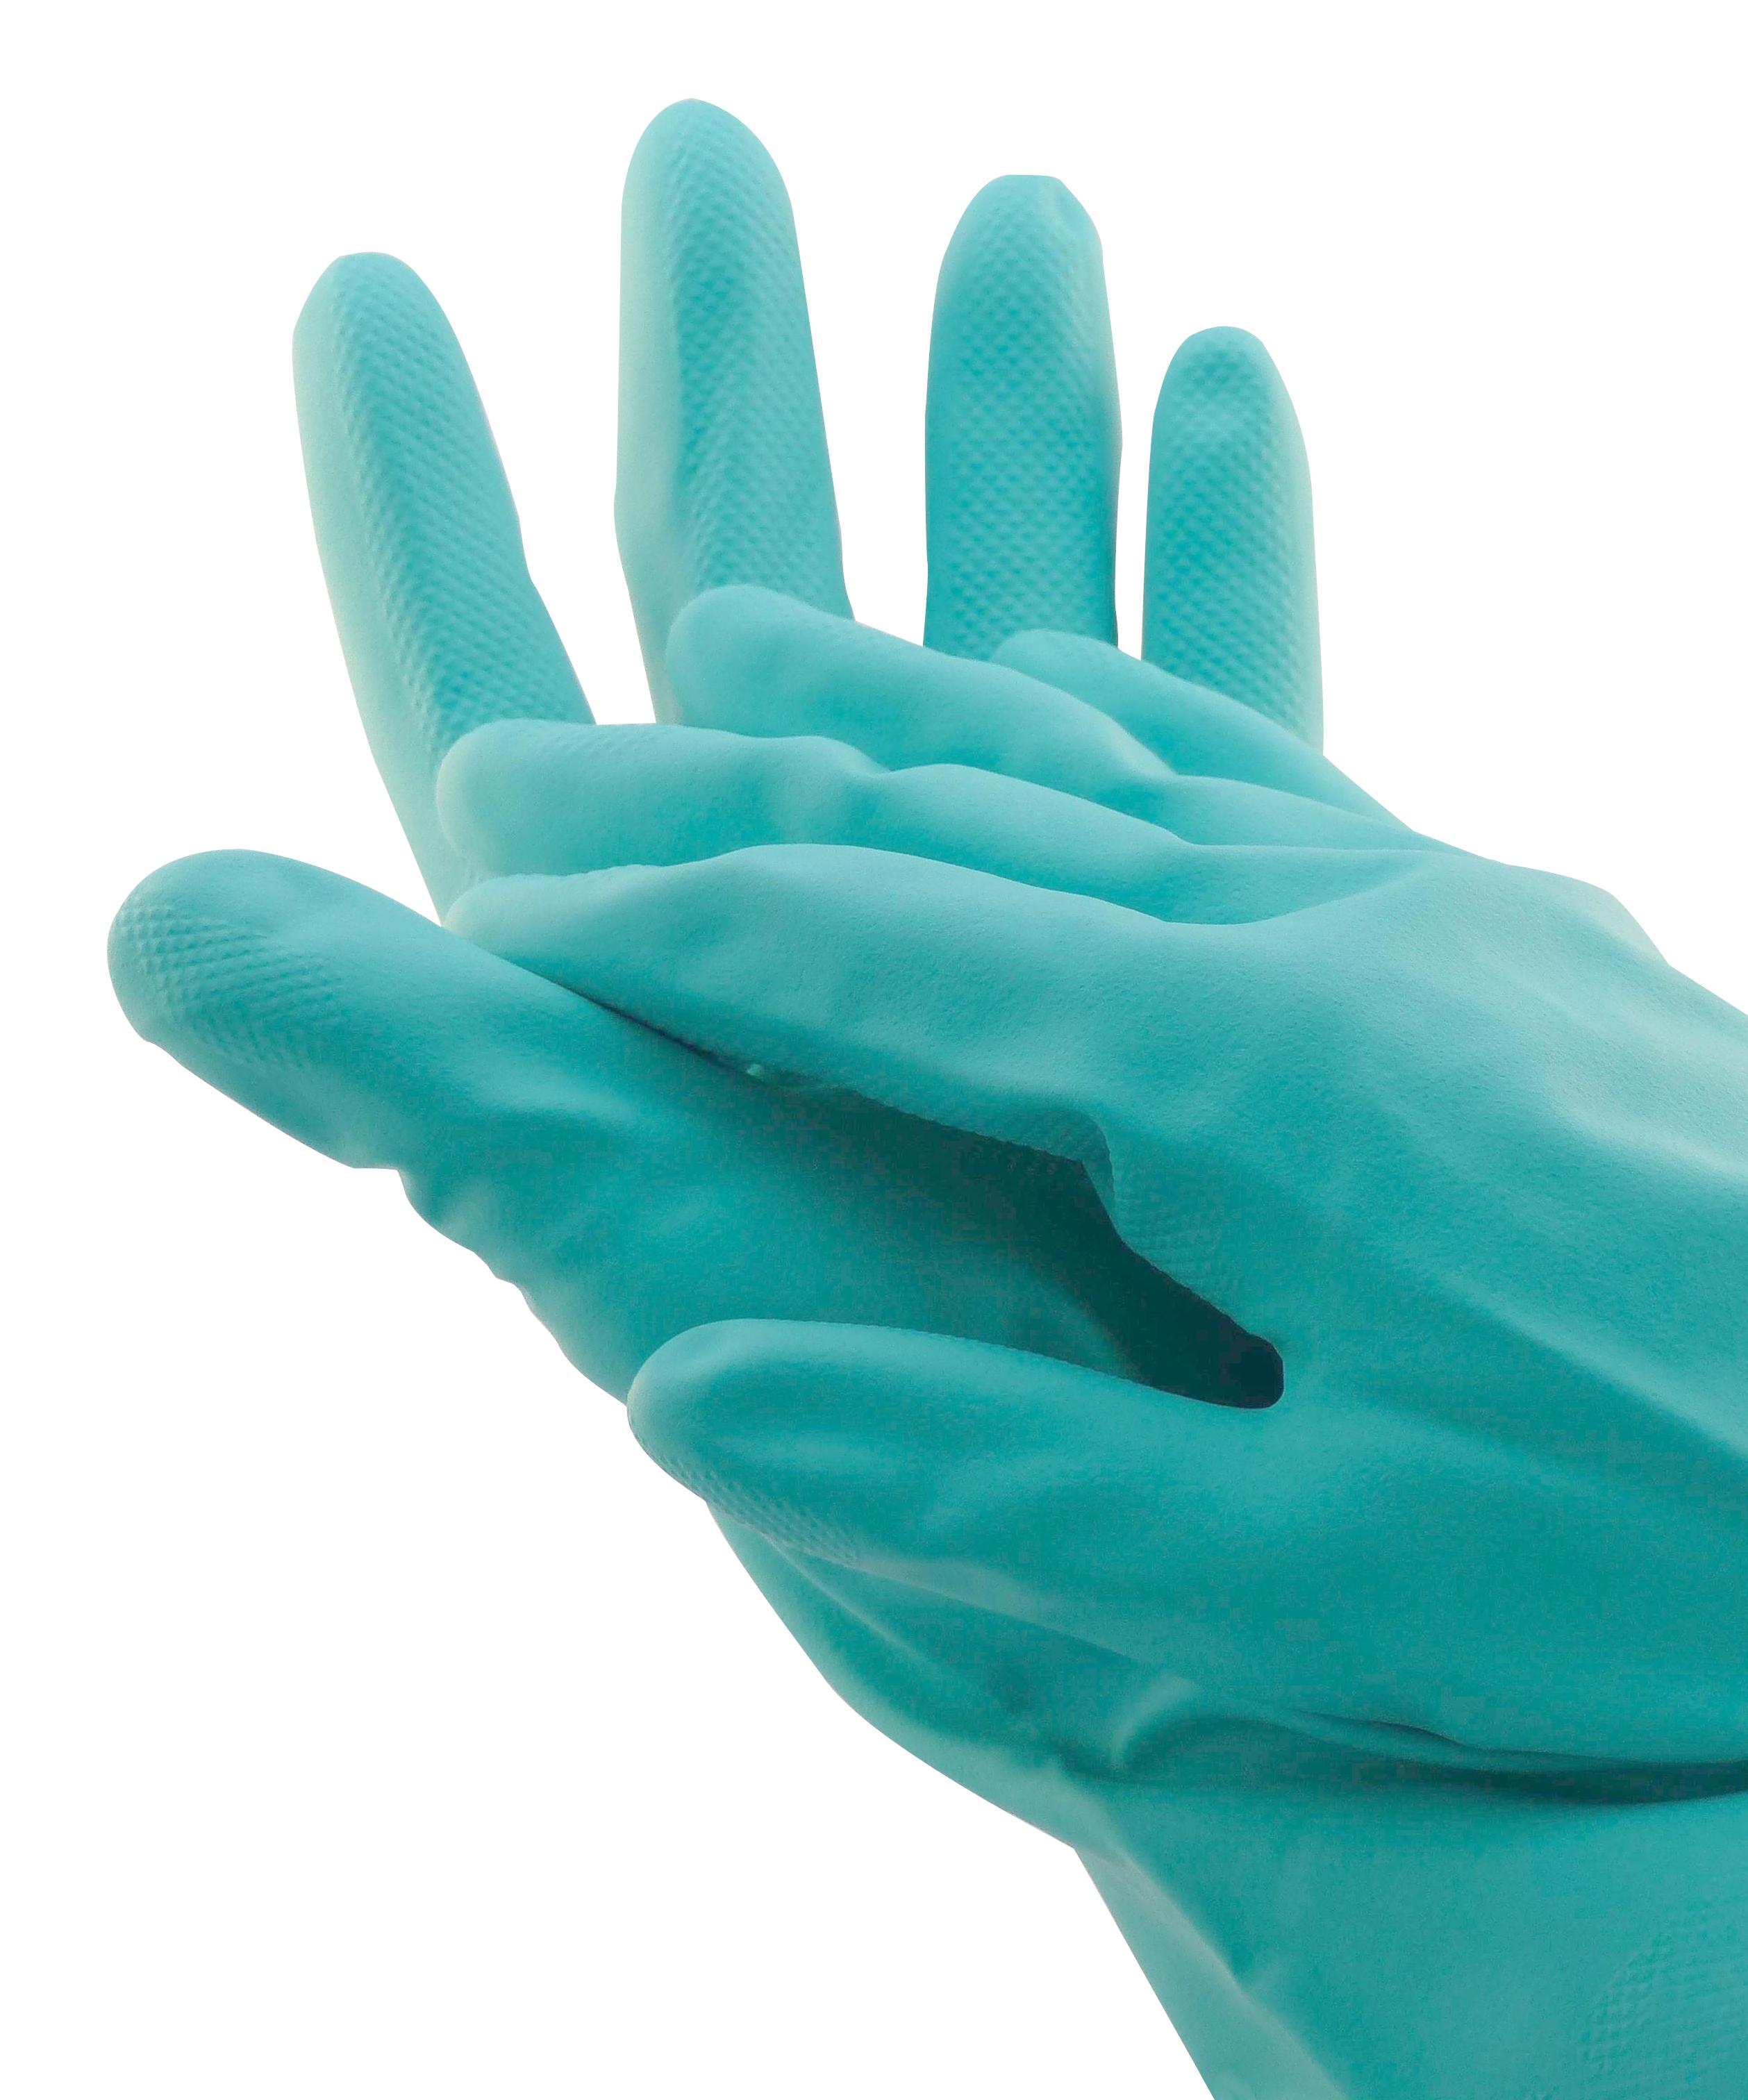 Grüne Mehrweg Nitril Handschuhe Größe XL 2 Stück (1 Paar) | Lack schützen Hände